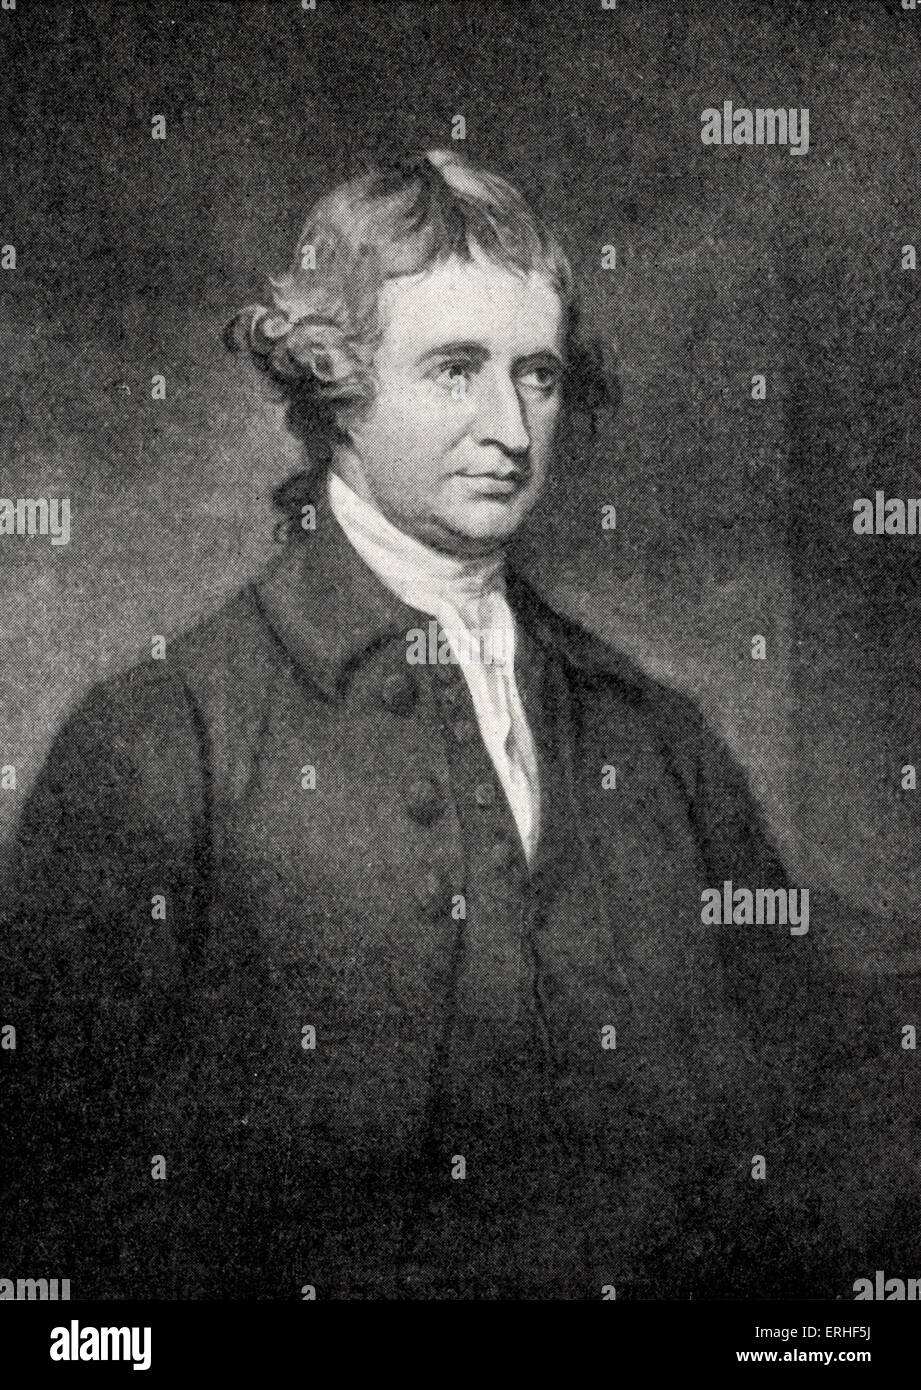 Edmund Burke - Irish statesman and philosopher 1729-1797 Stock Photo